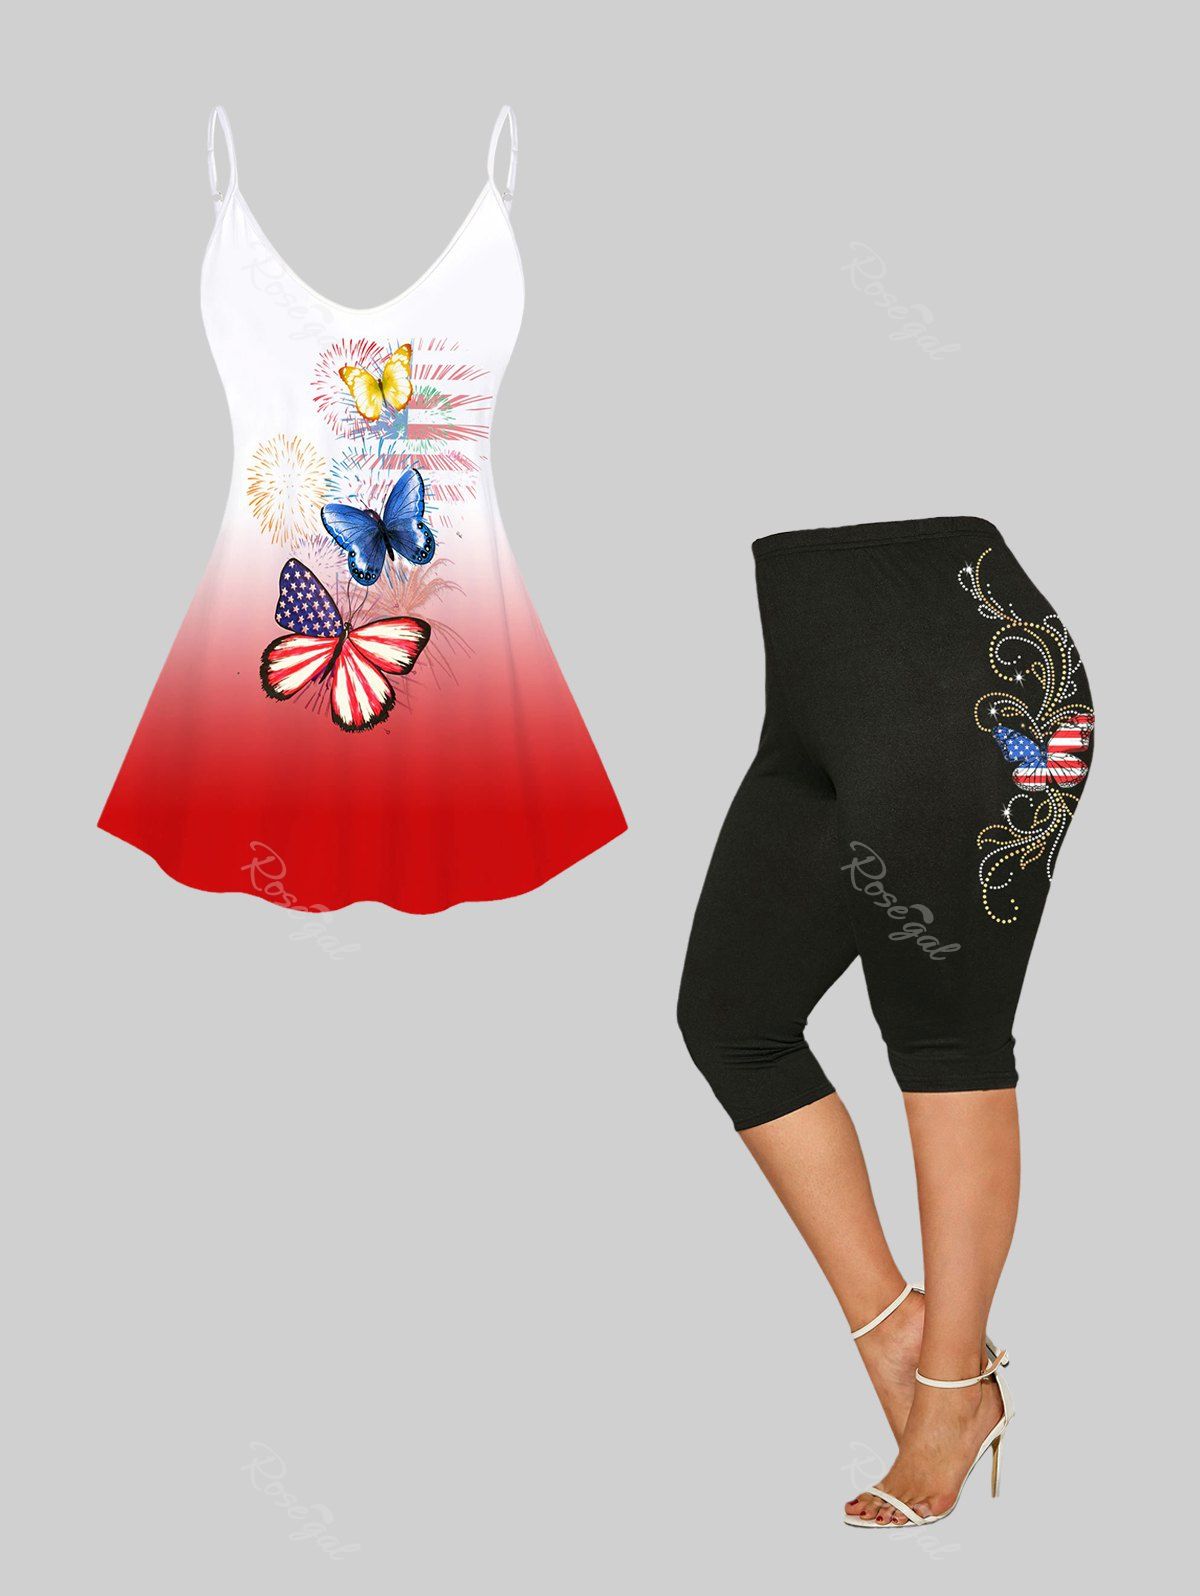 New Patriotic American Flag Print Graphic Top and Capri Leggings Plus Size Summer Outfit  